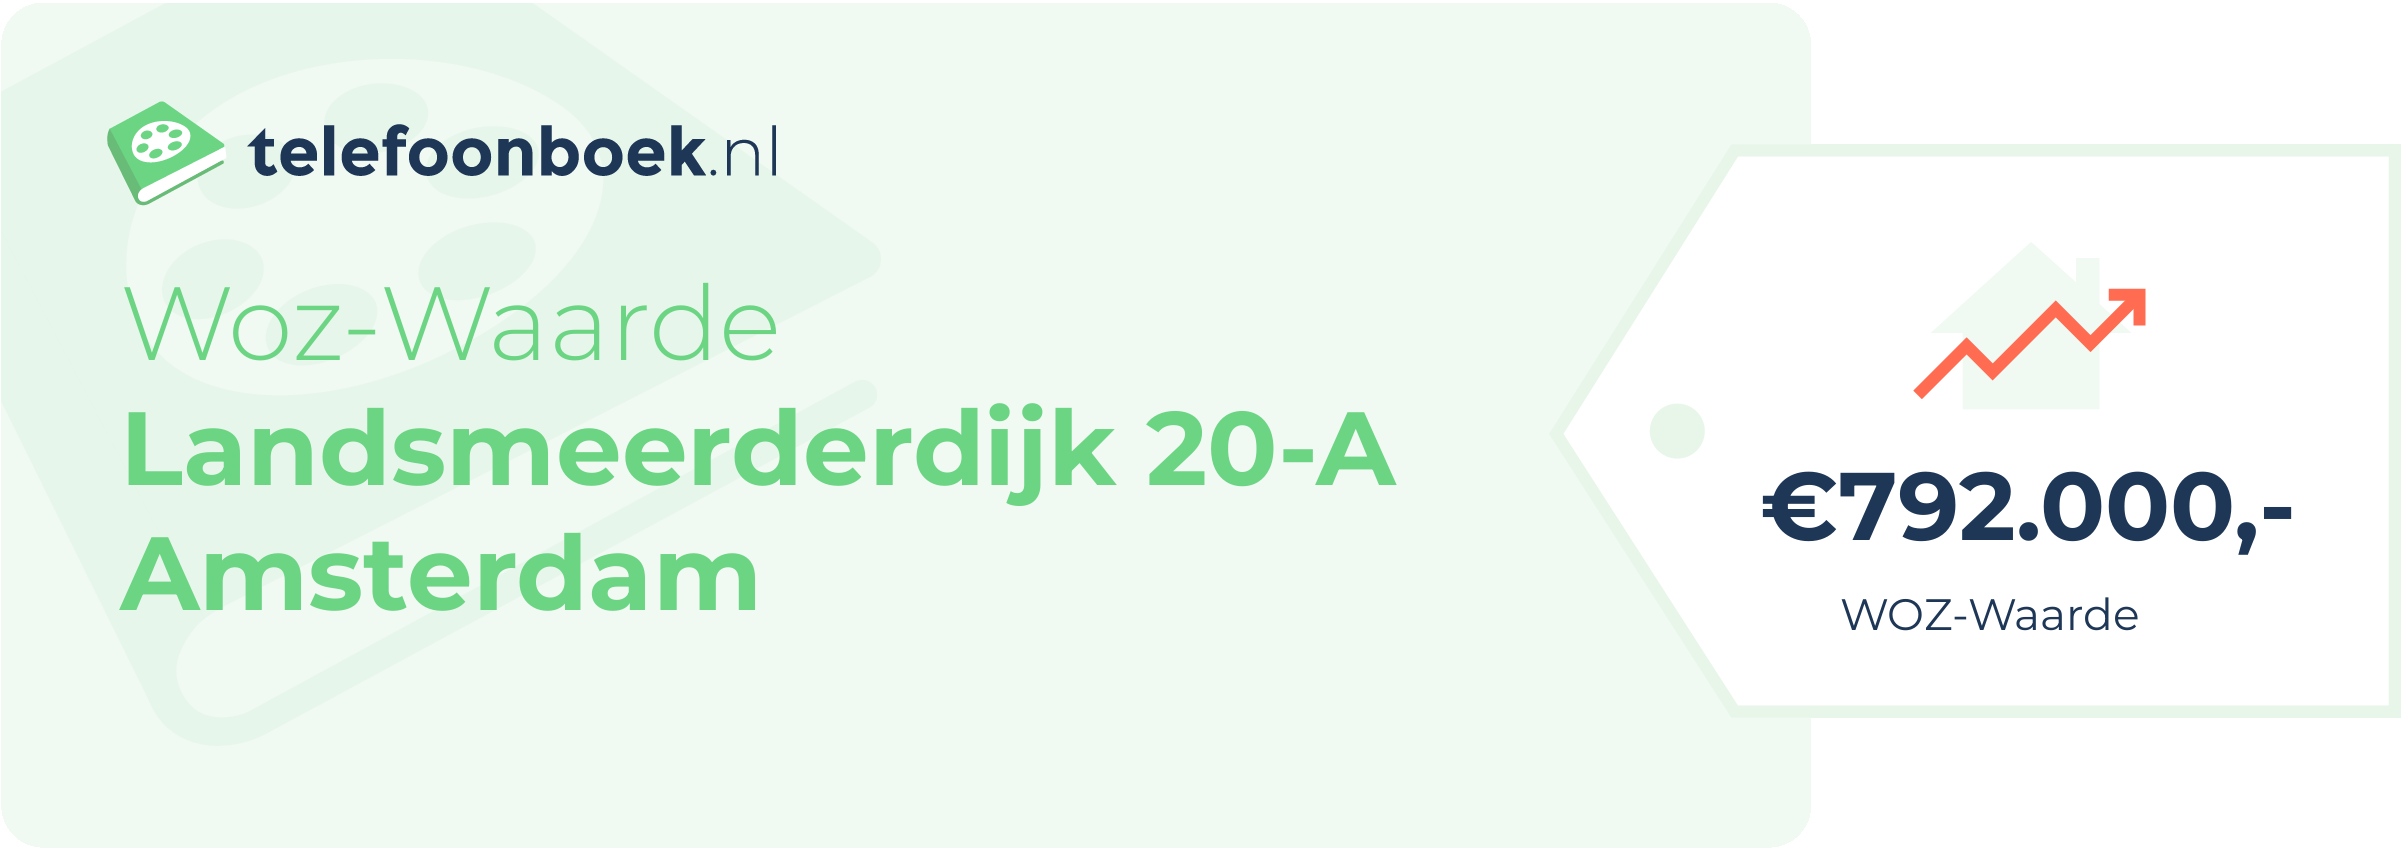 WOZ-waarde Landsmeerderdijk 20-A Amsterdam